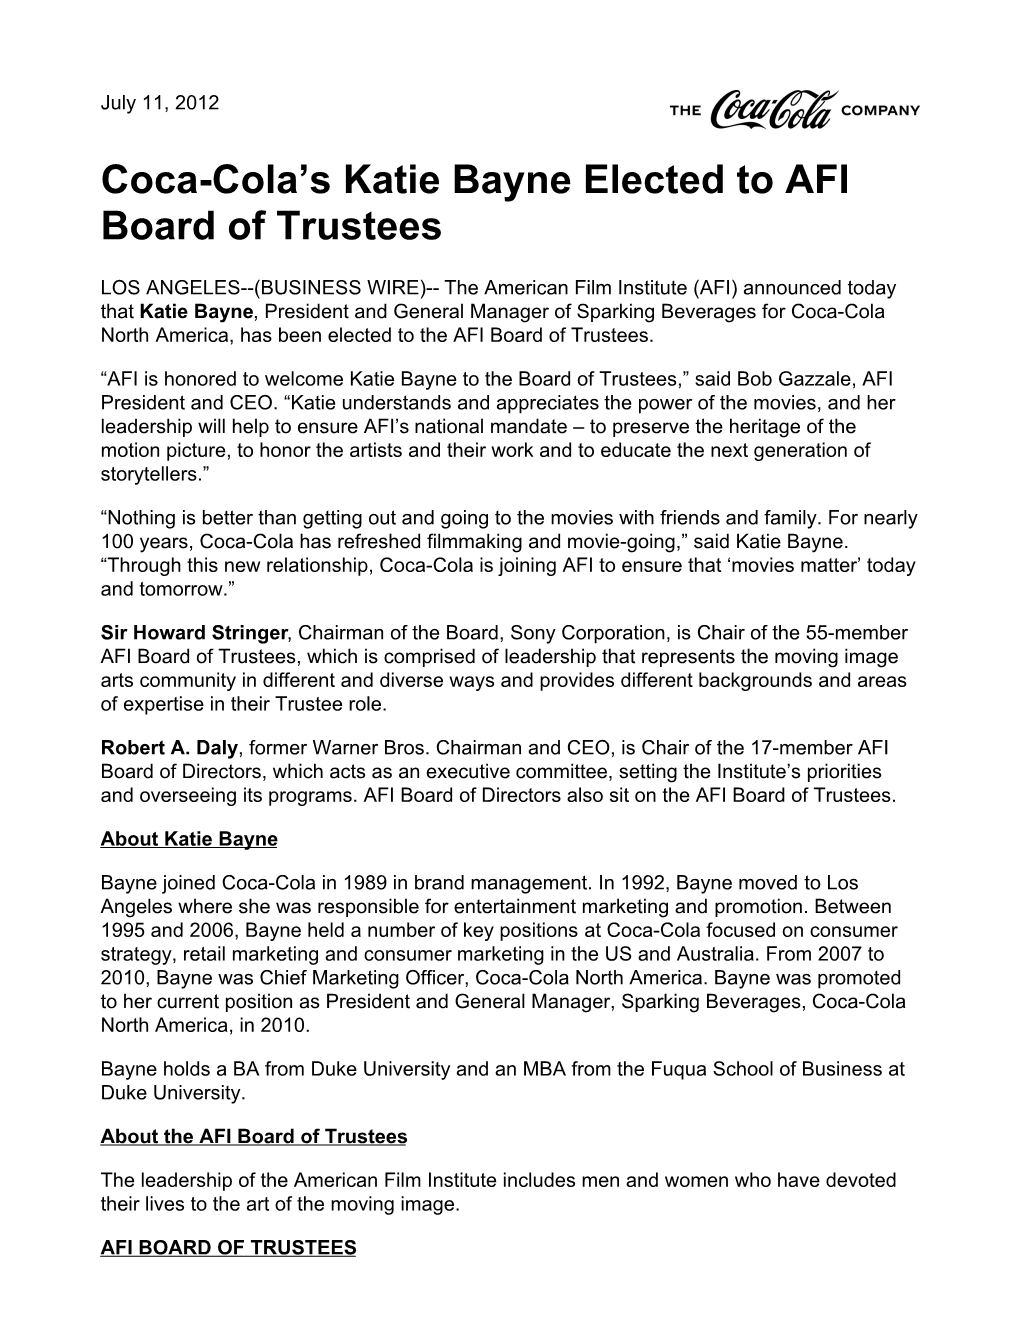 Coca-Cola's Katie Bayne Elected to AFI Board of Trustees